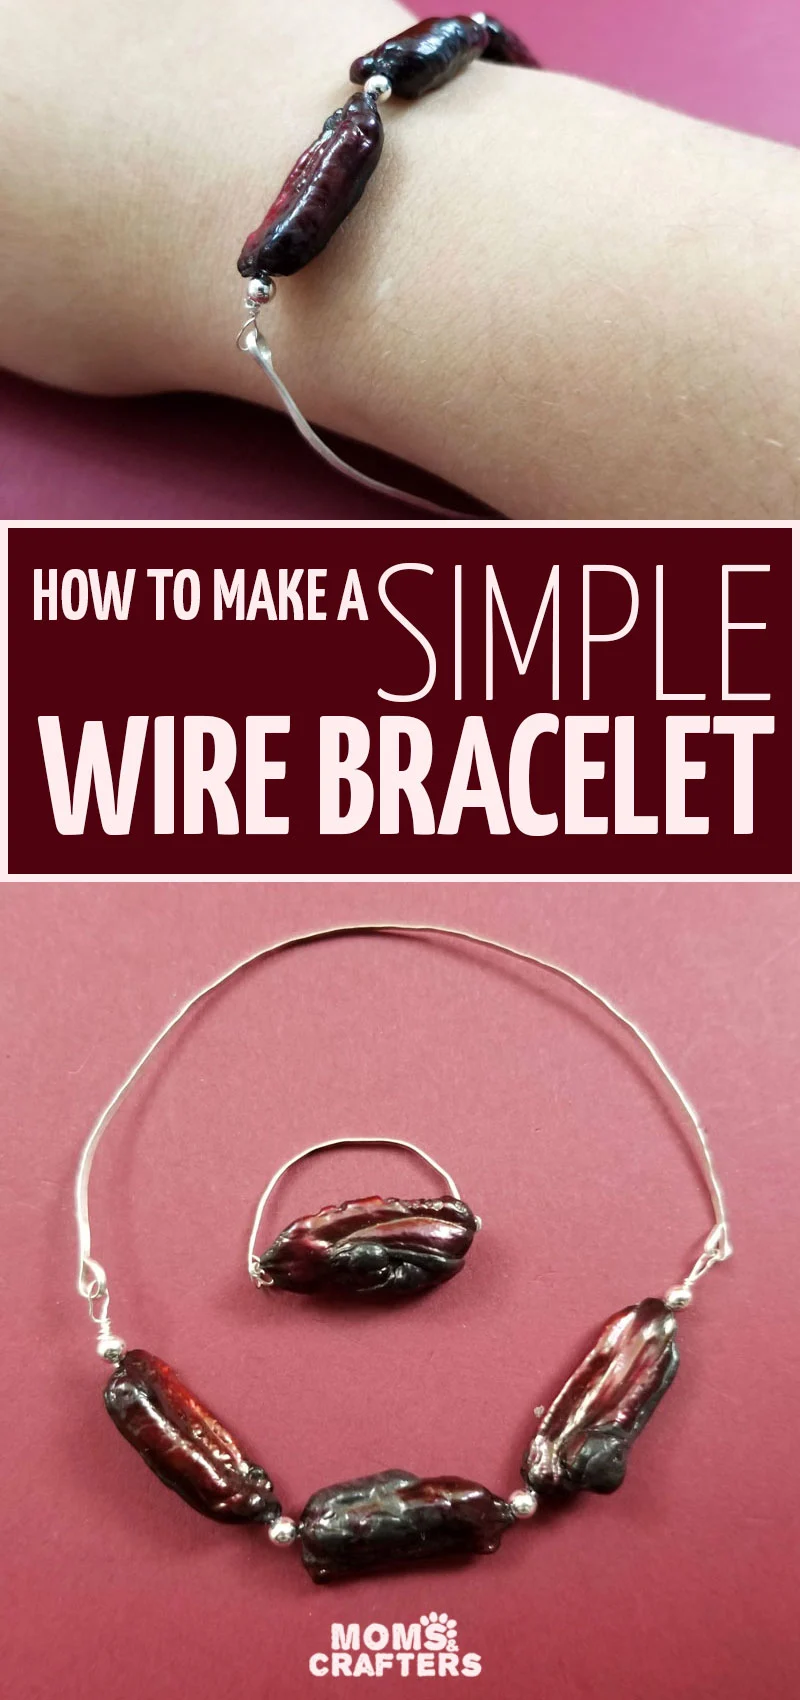 How to Make the Gemstone Memory Wire Bracelet Kit - YouTube